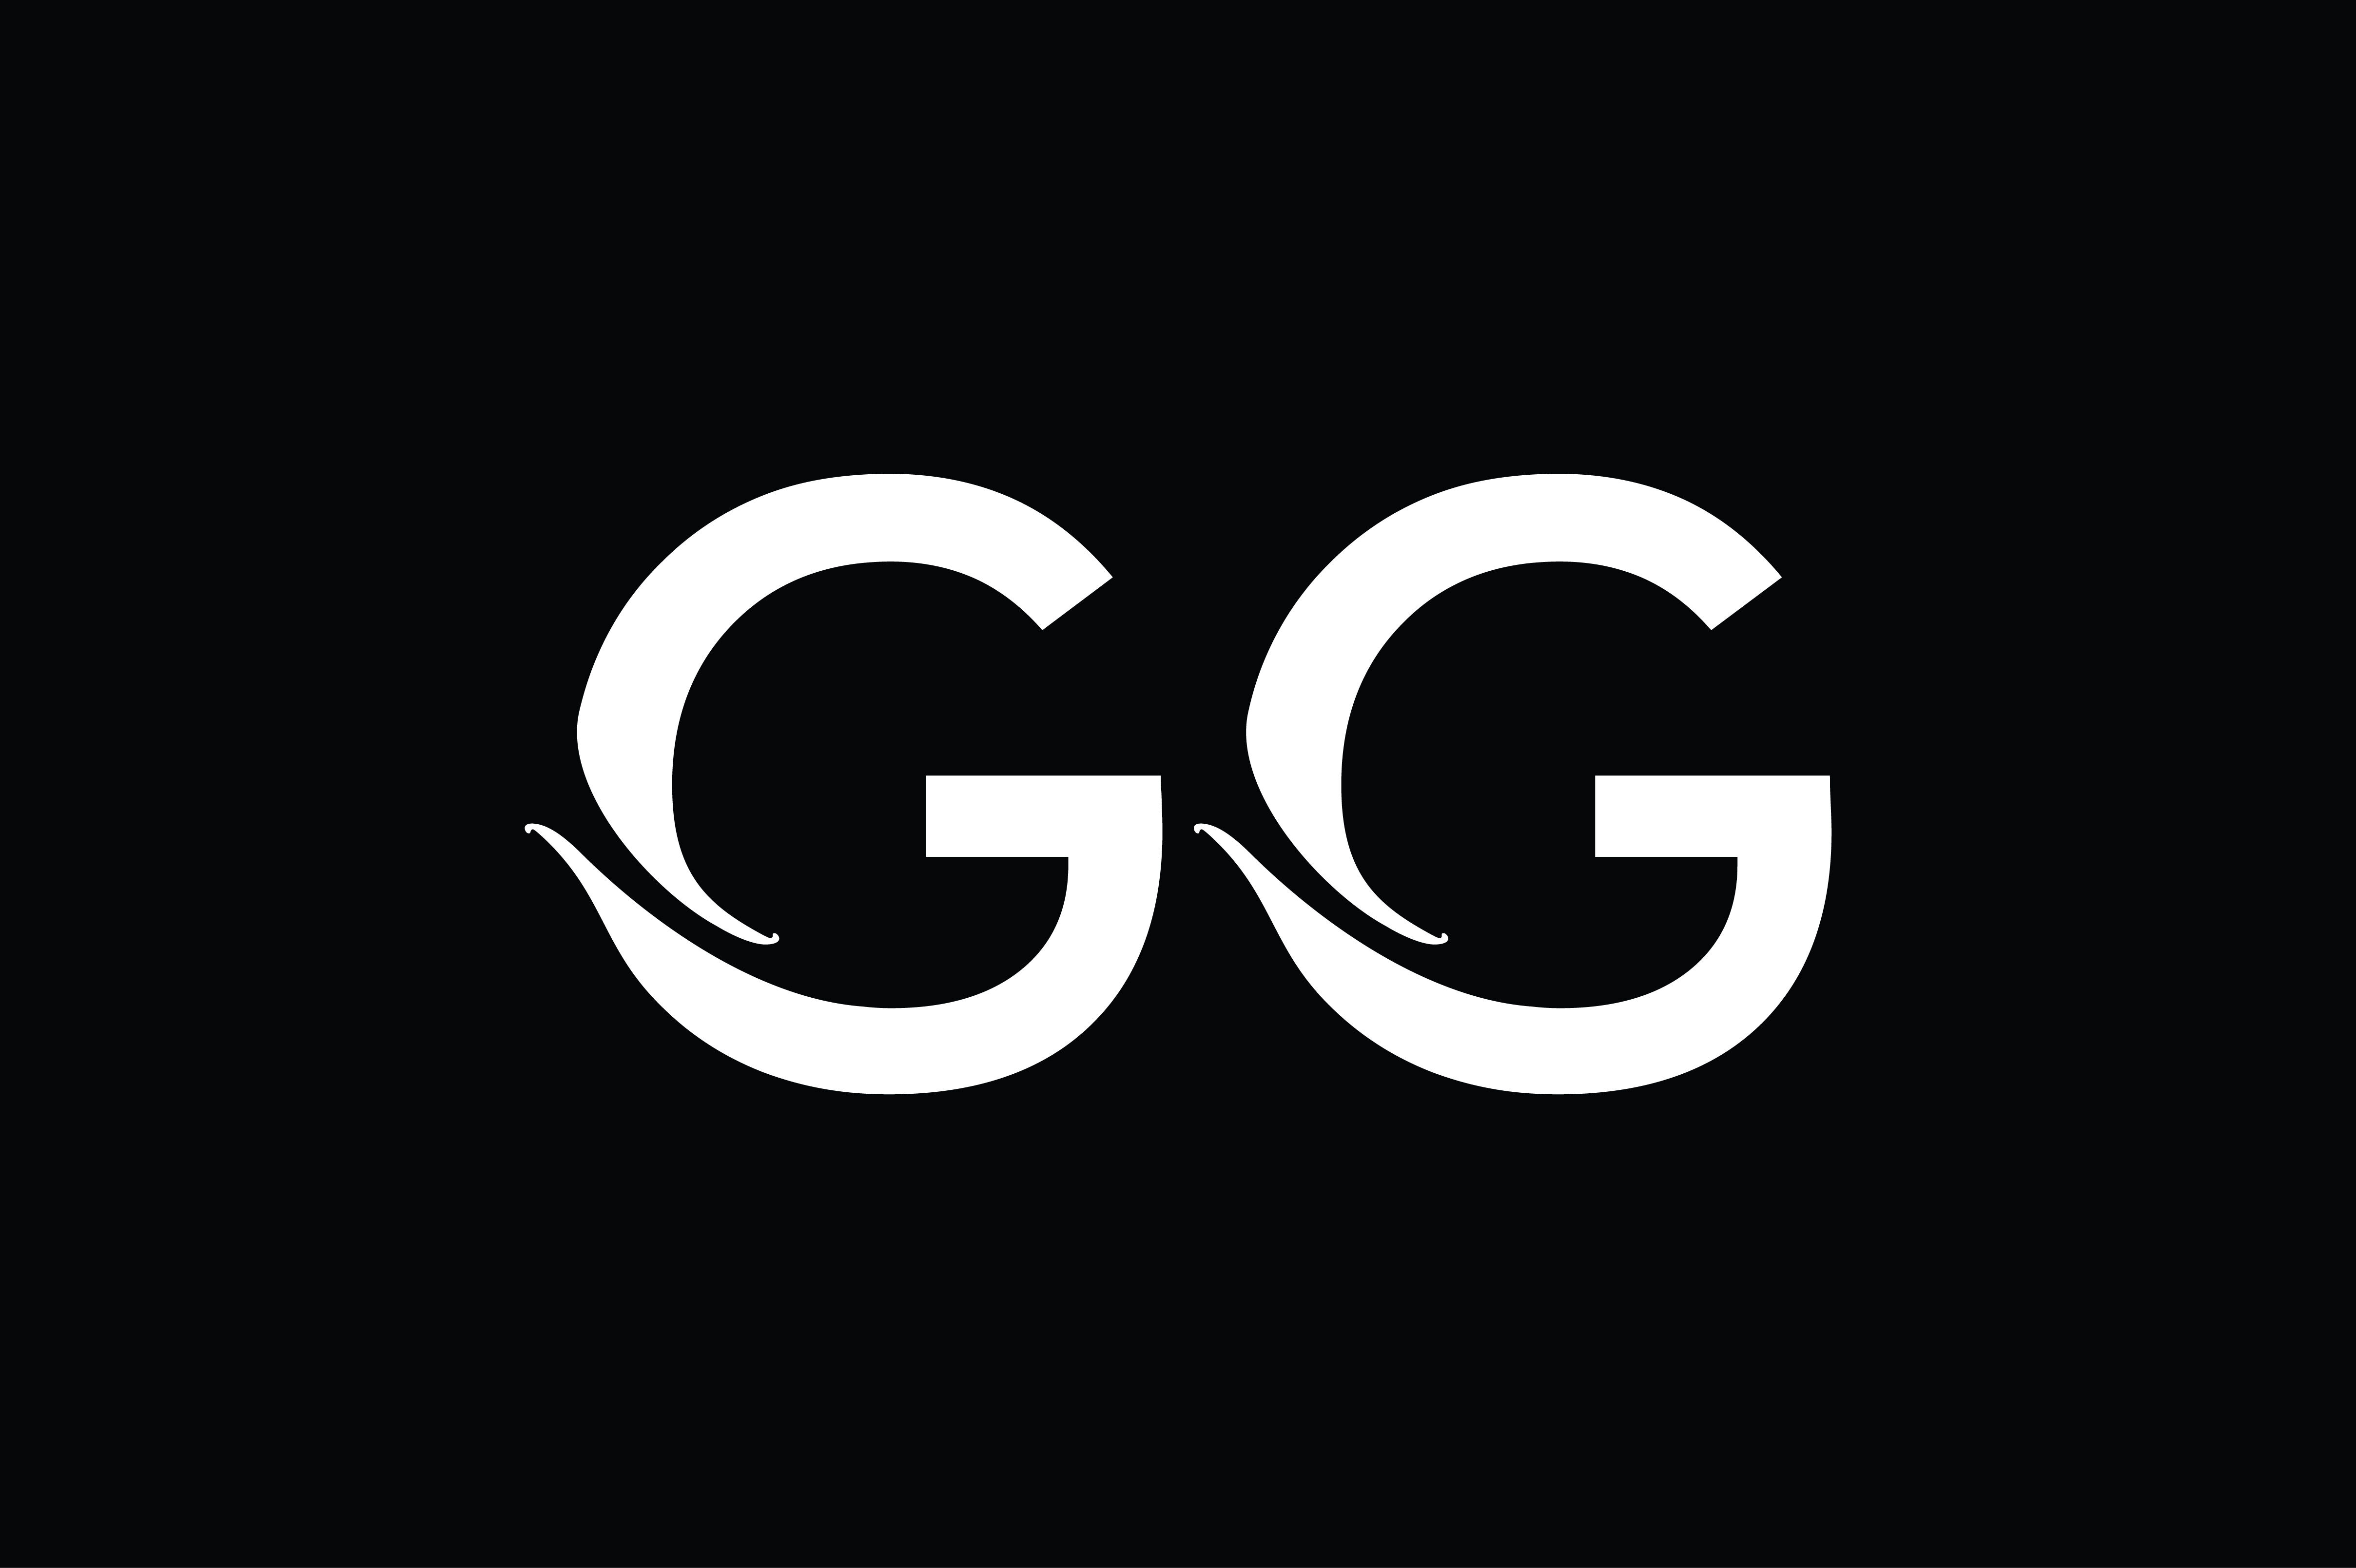 gg monogram